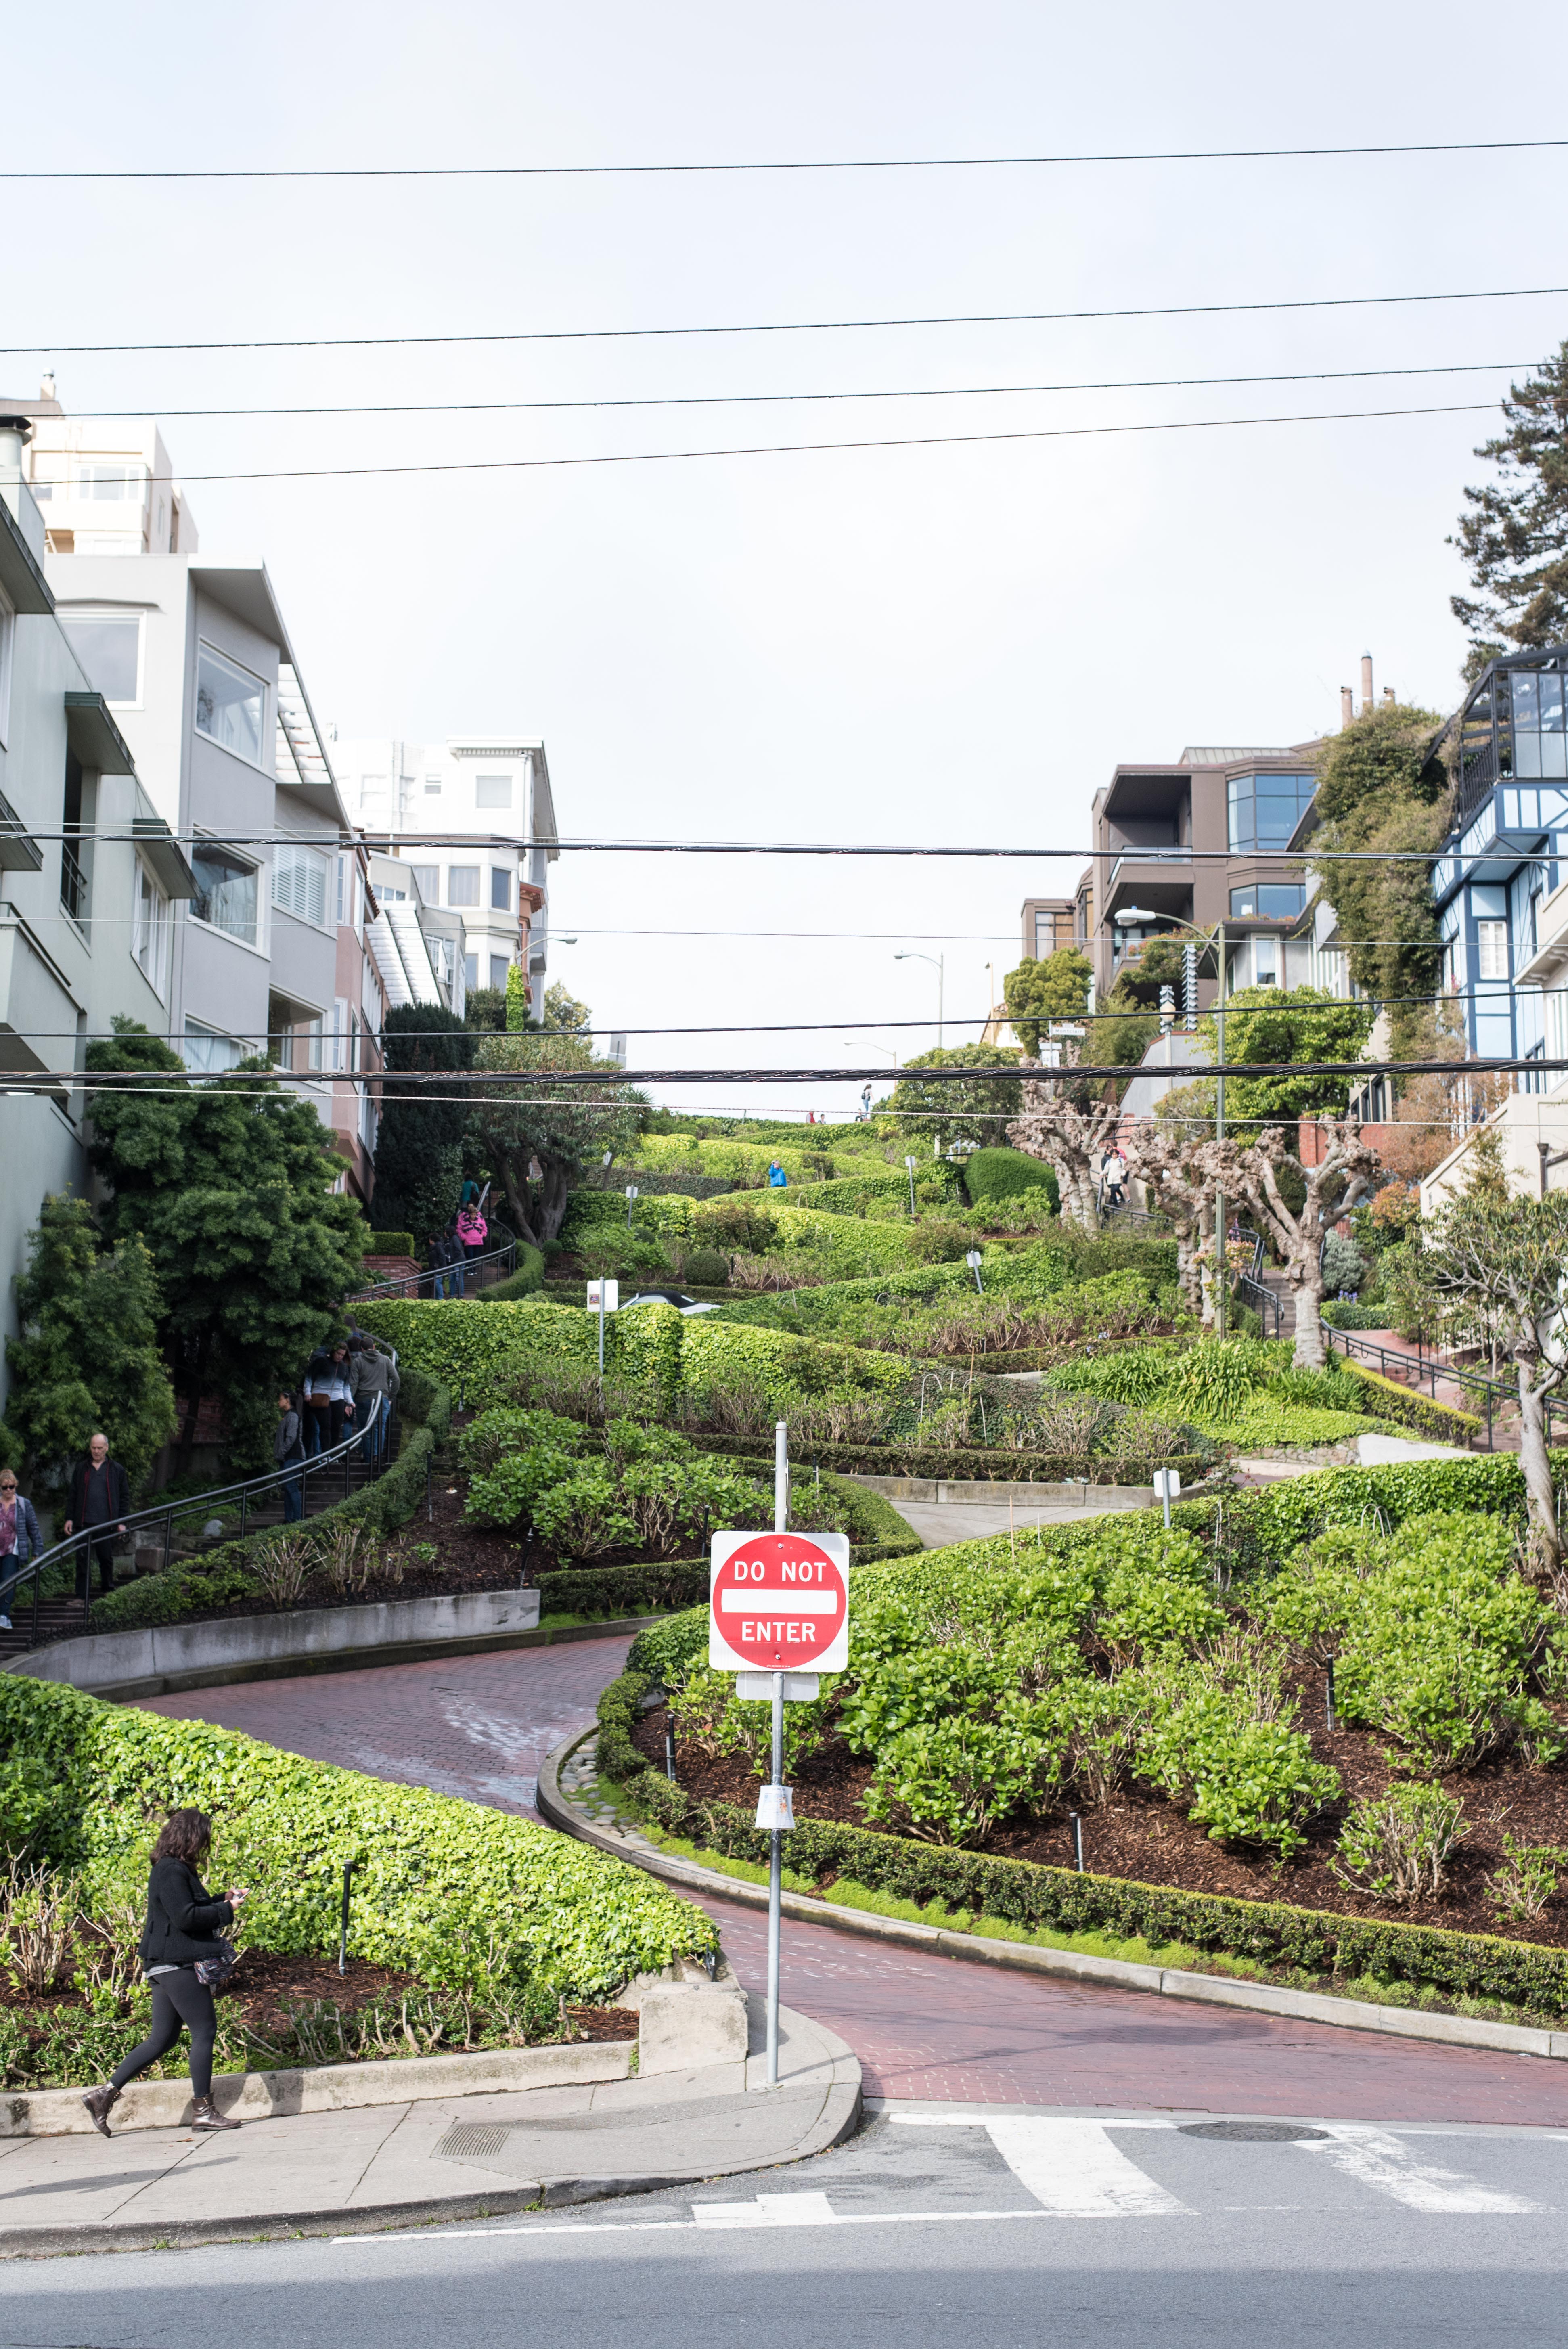 San Francisco Travel Guide - Lombard Street